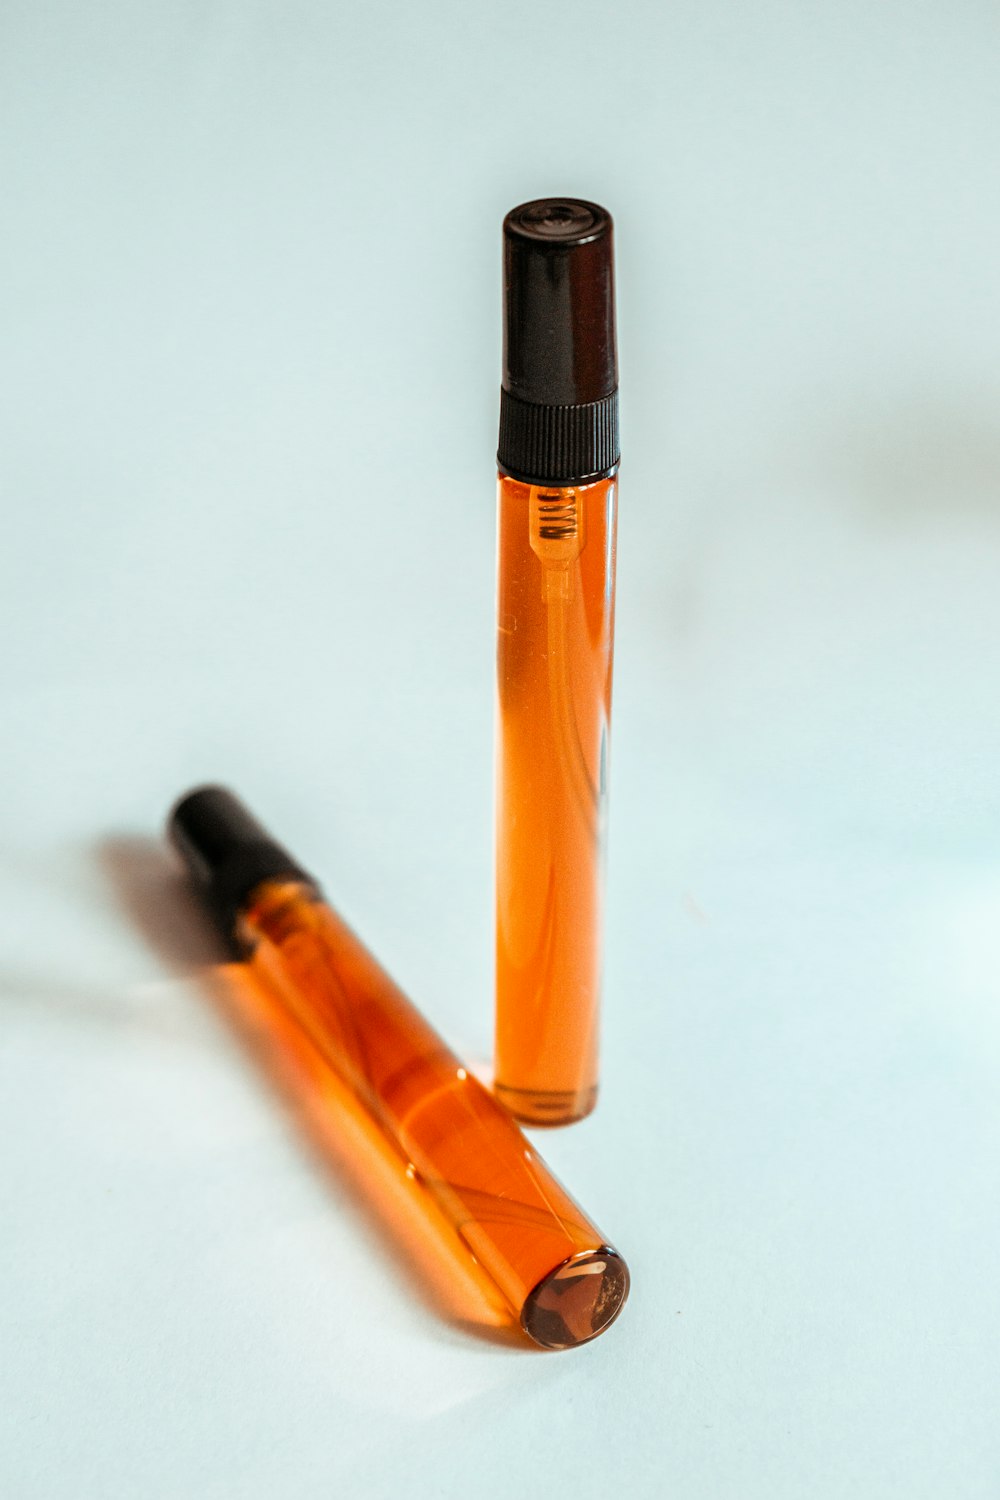 orange and black pen on white table